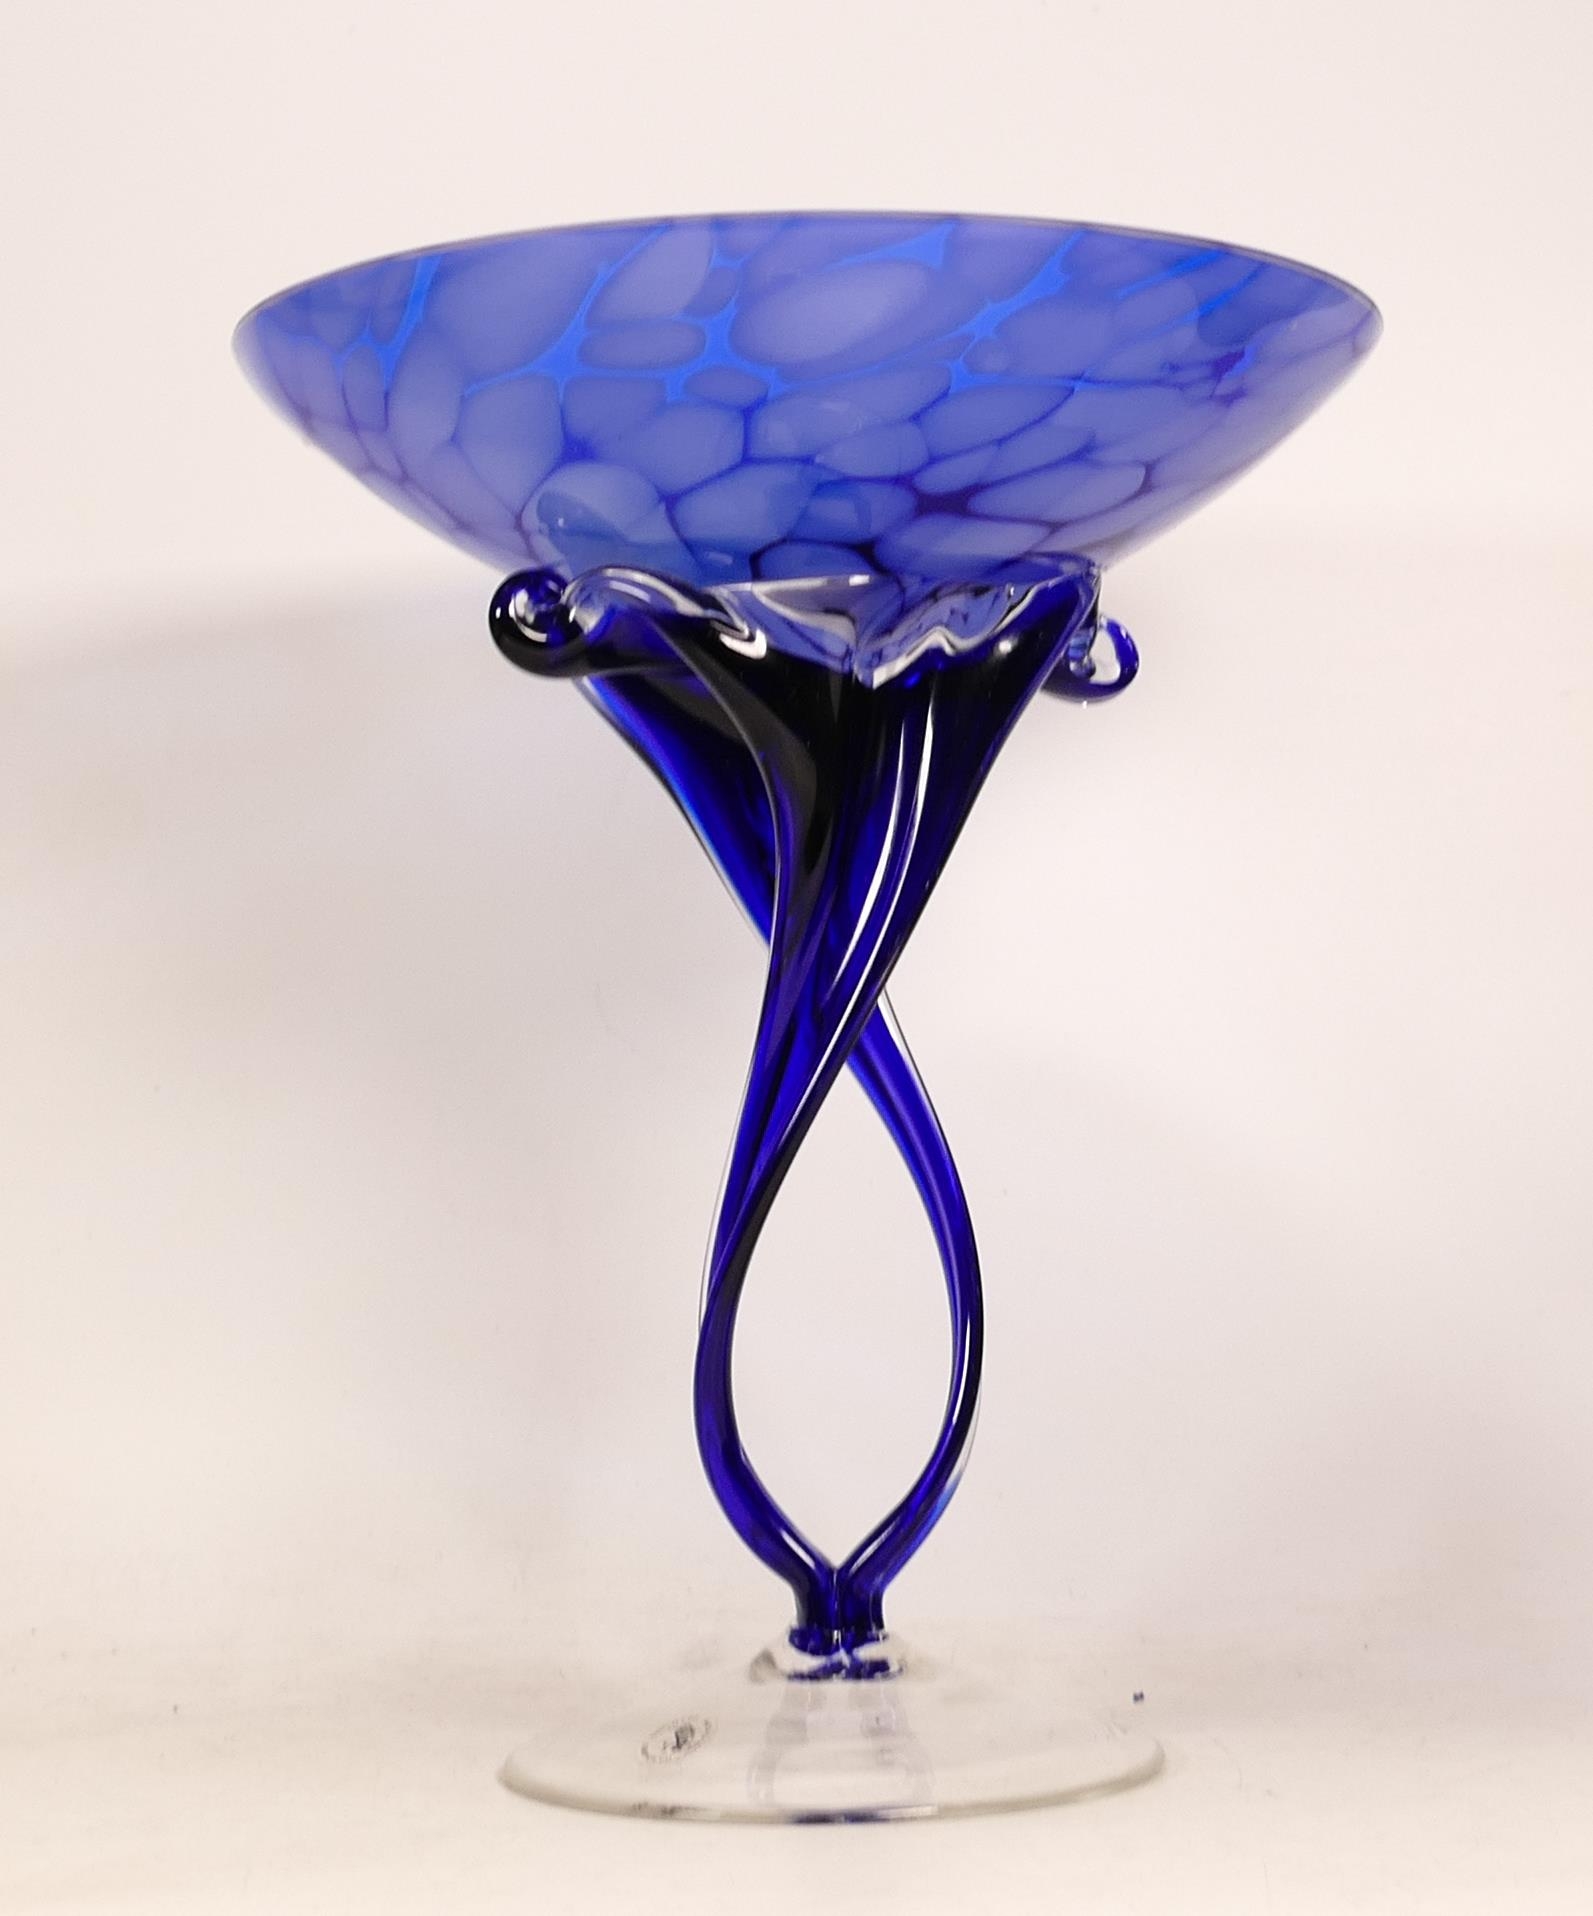 Alicja Handcrafted Blue Glass Centrepiece Bowl, height 27.5cm